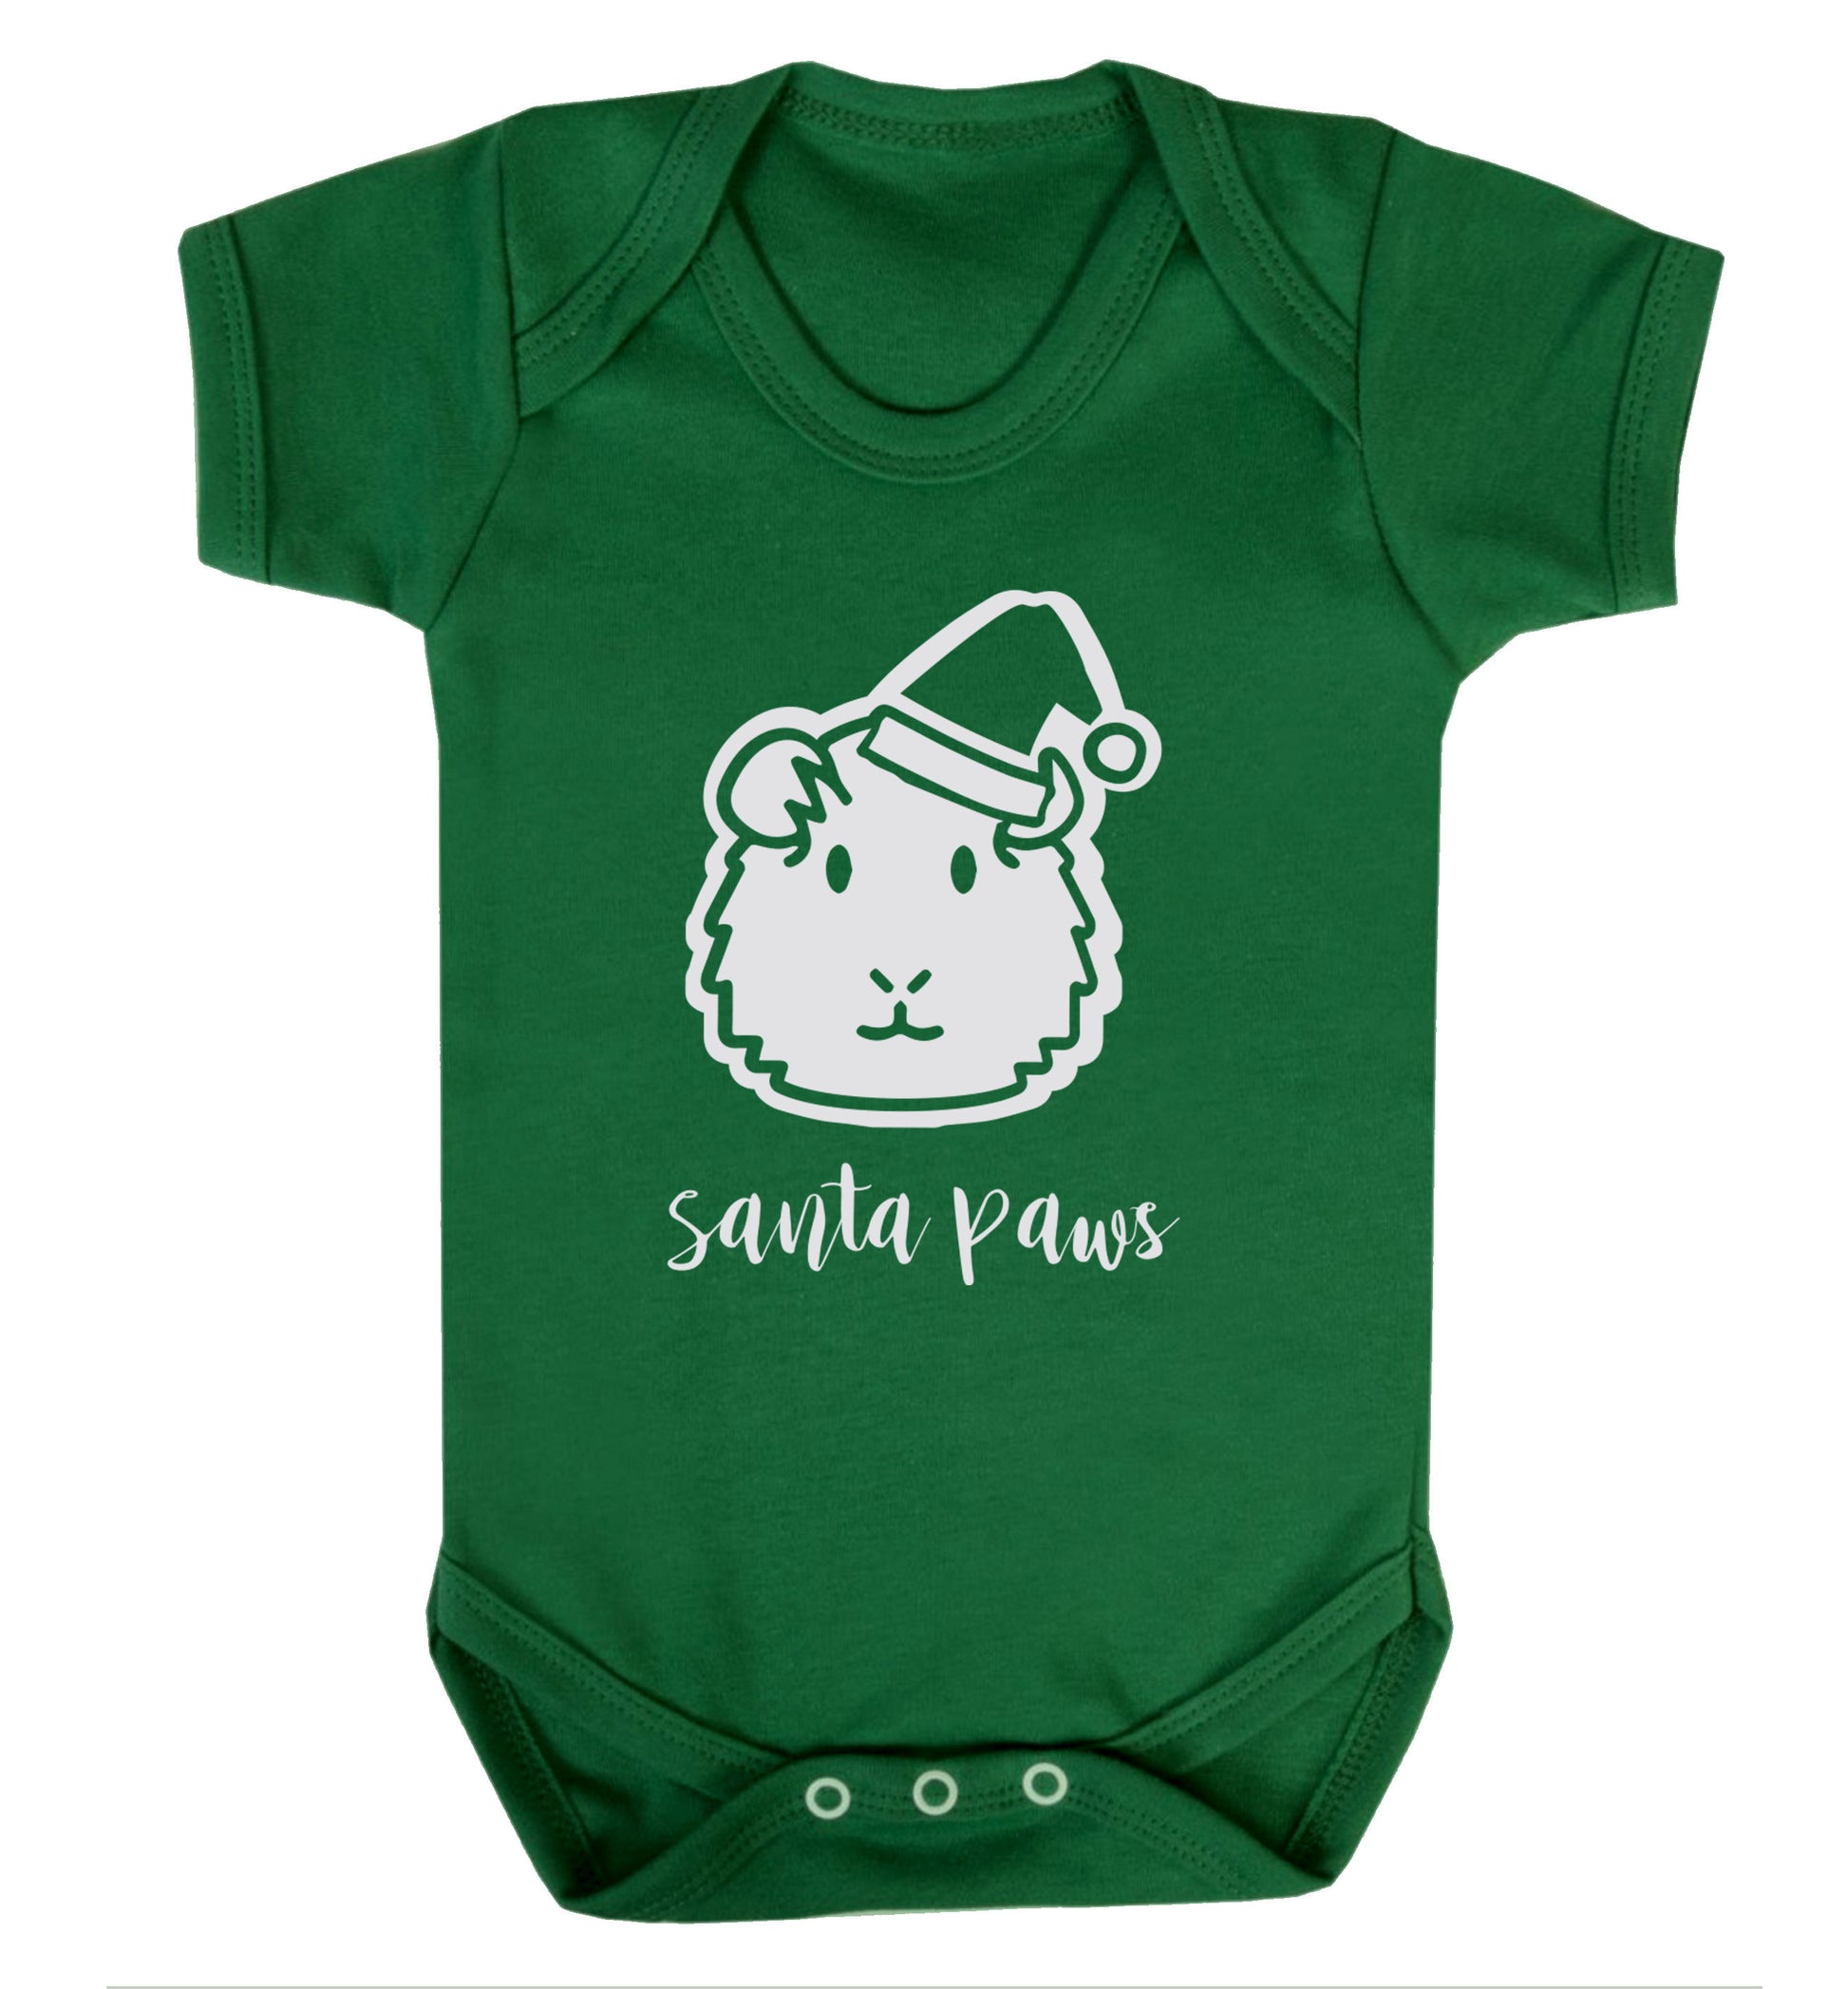 Guinea pig Santa Paws Baby Vest green 18-24 months